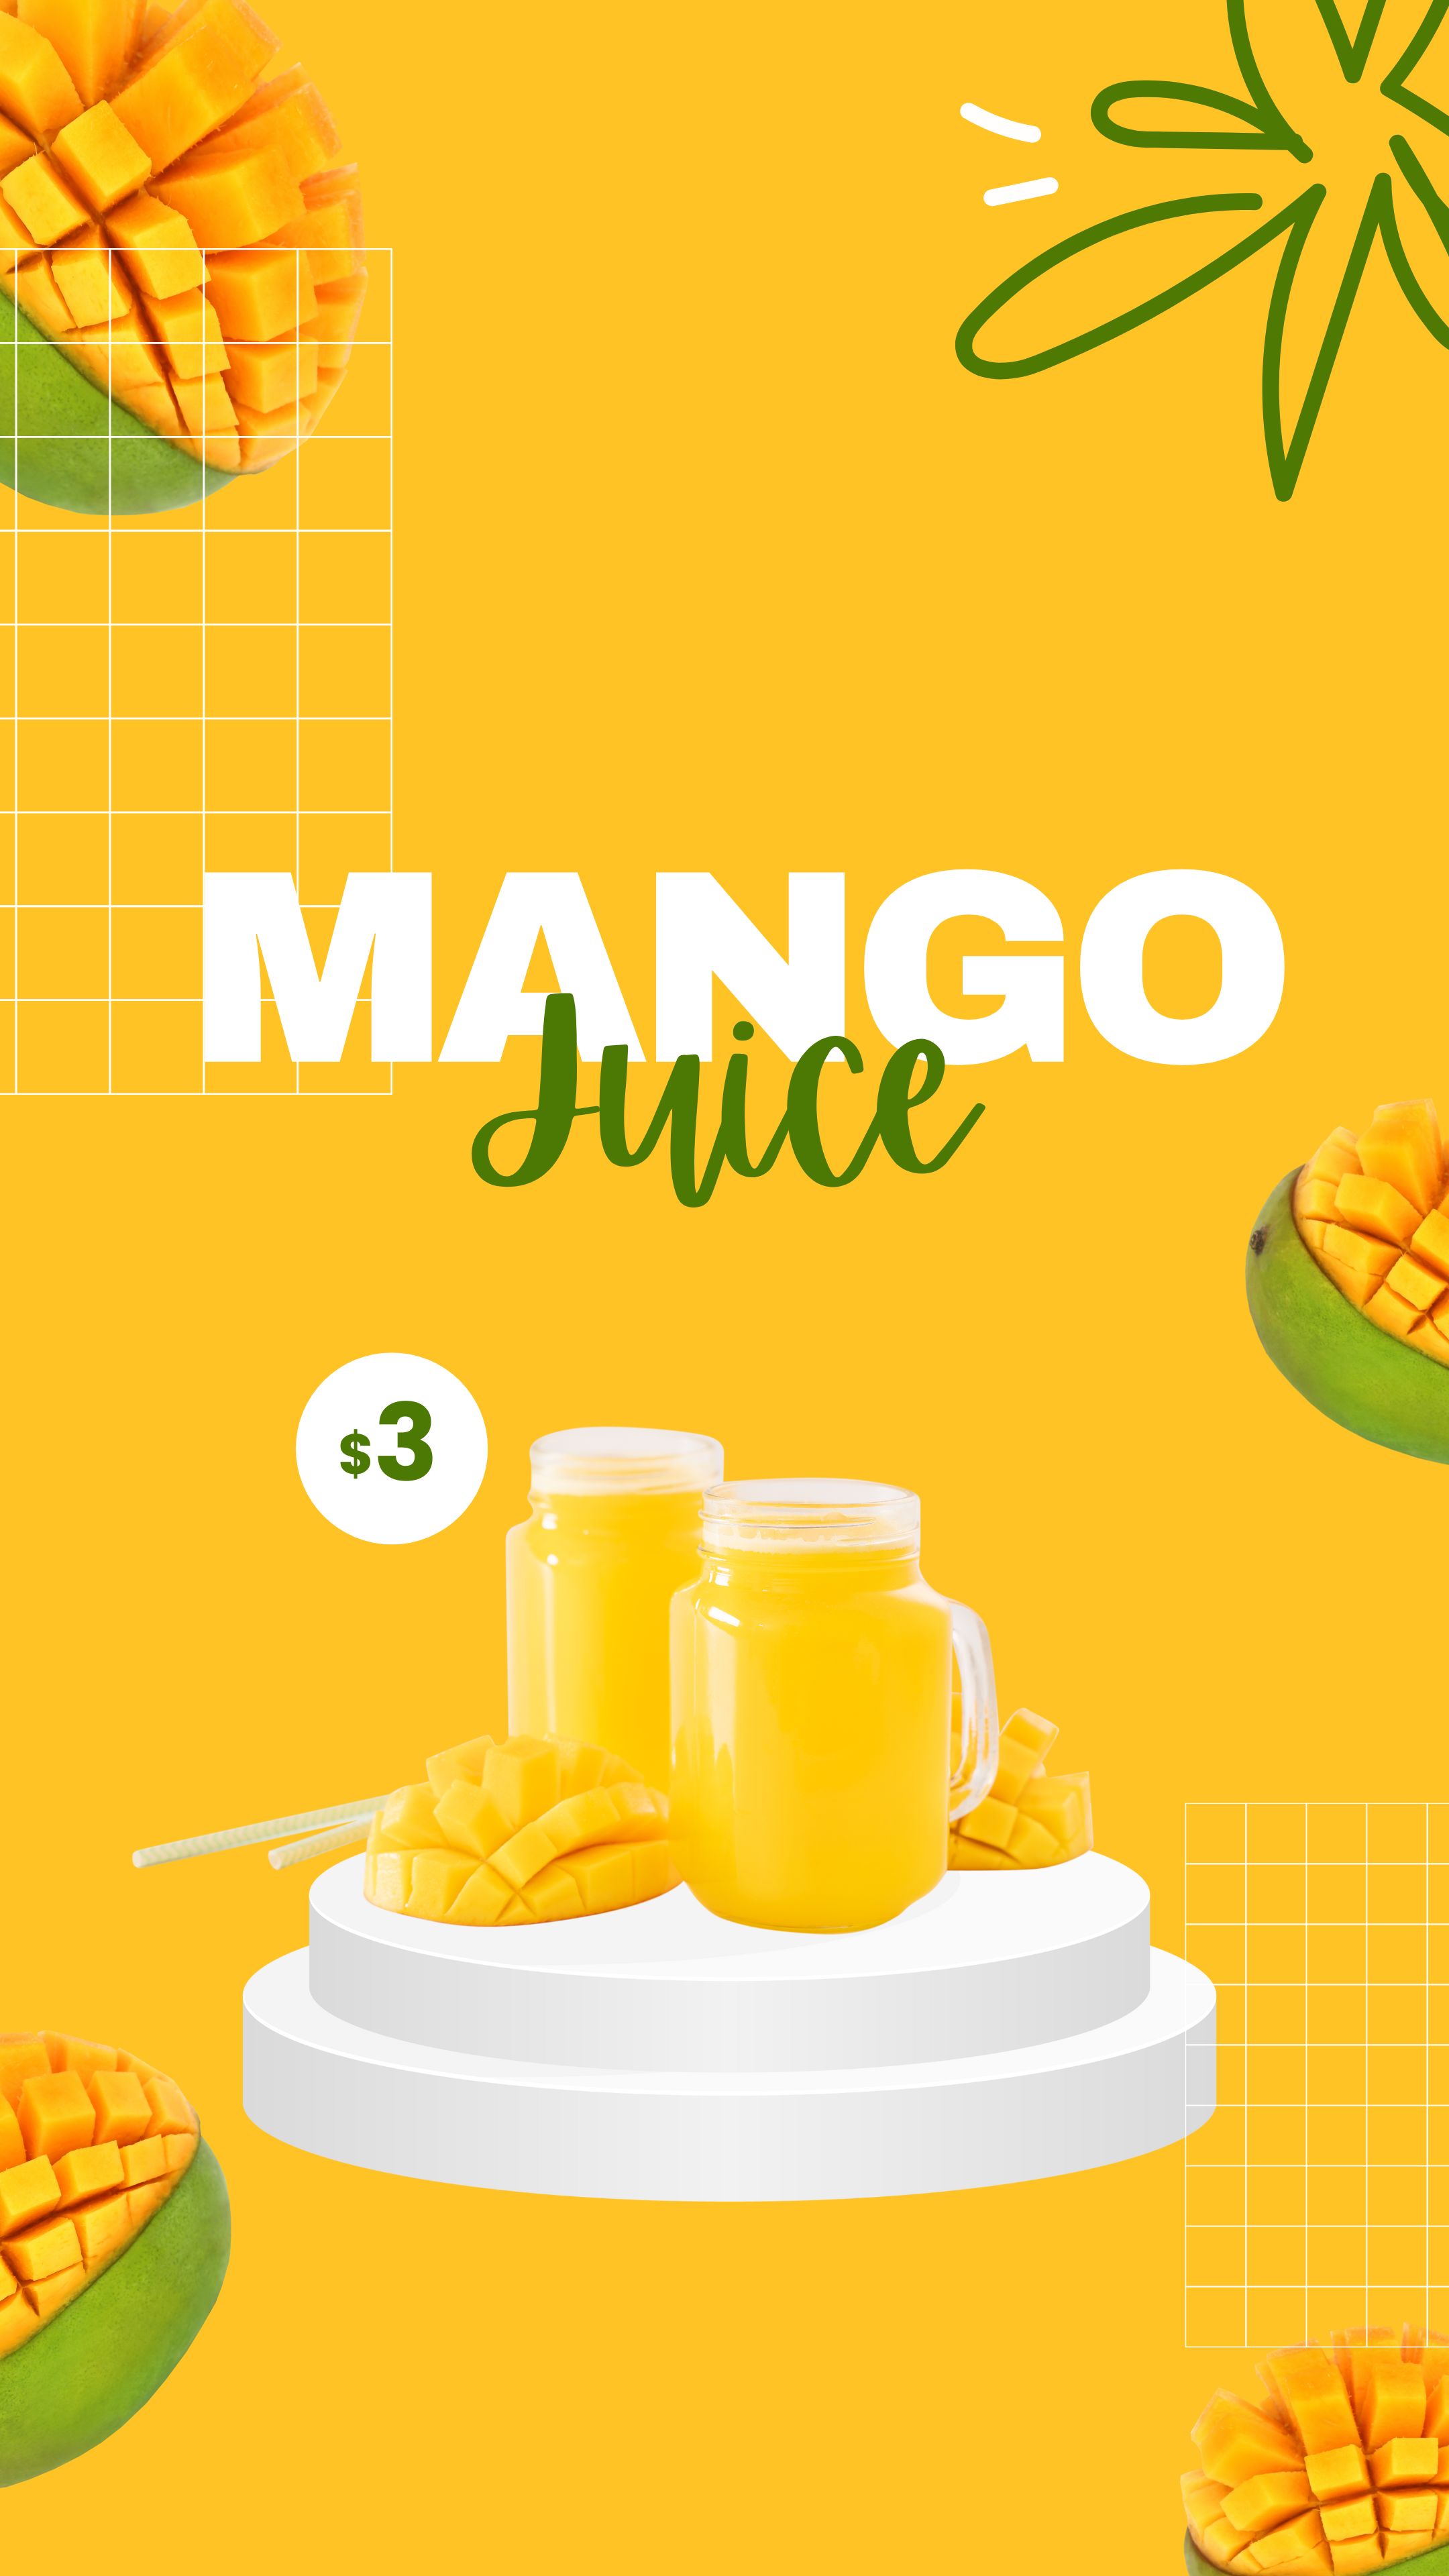 Template Story Instagram Manggo Juice